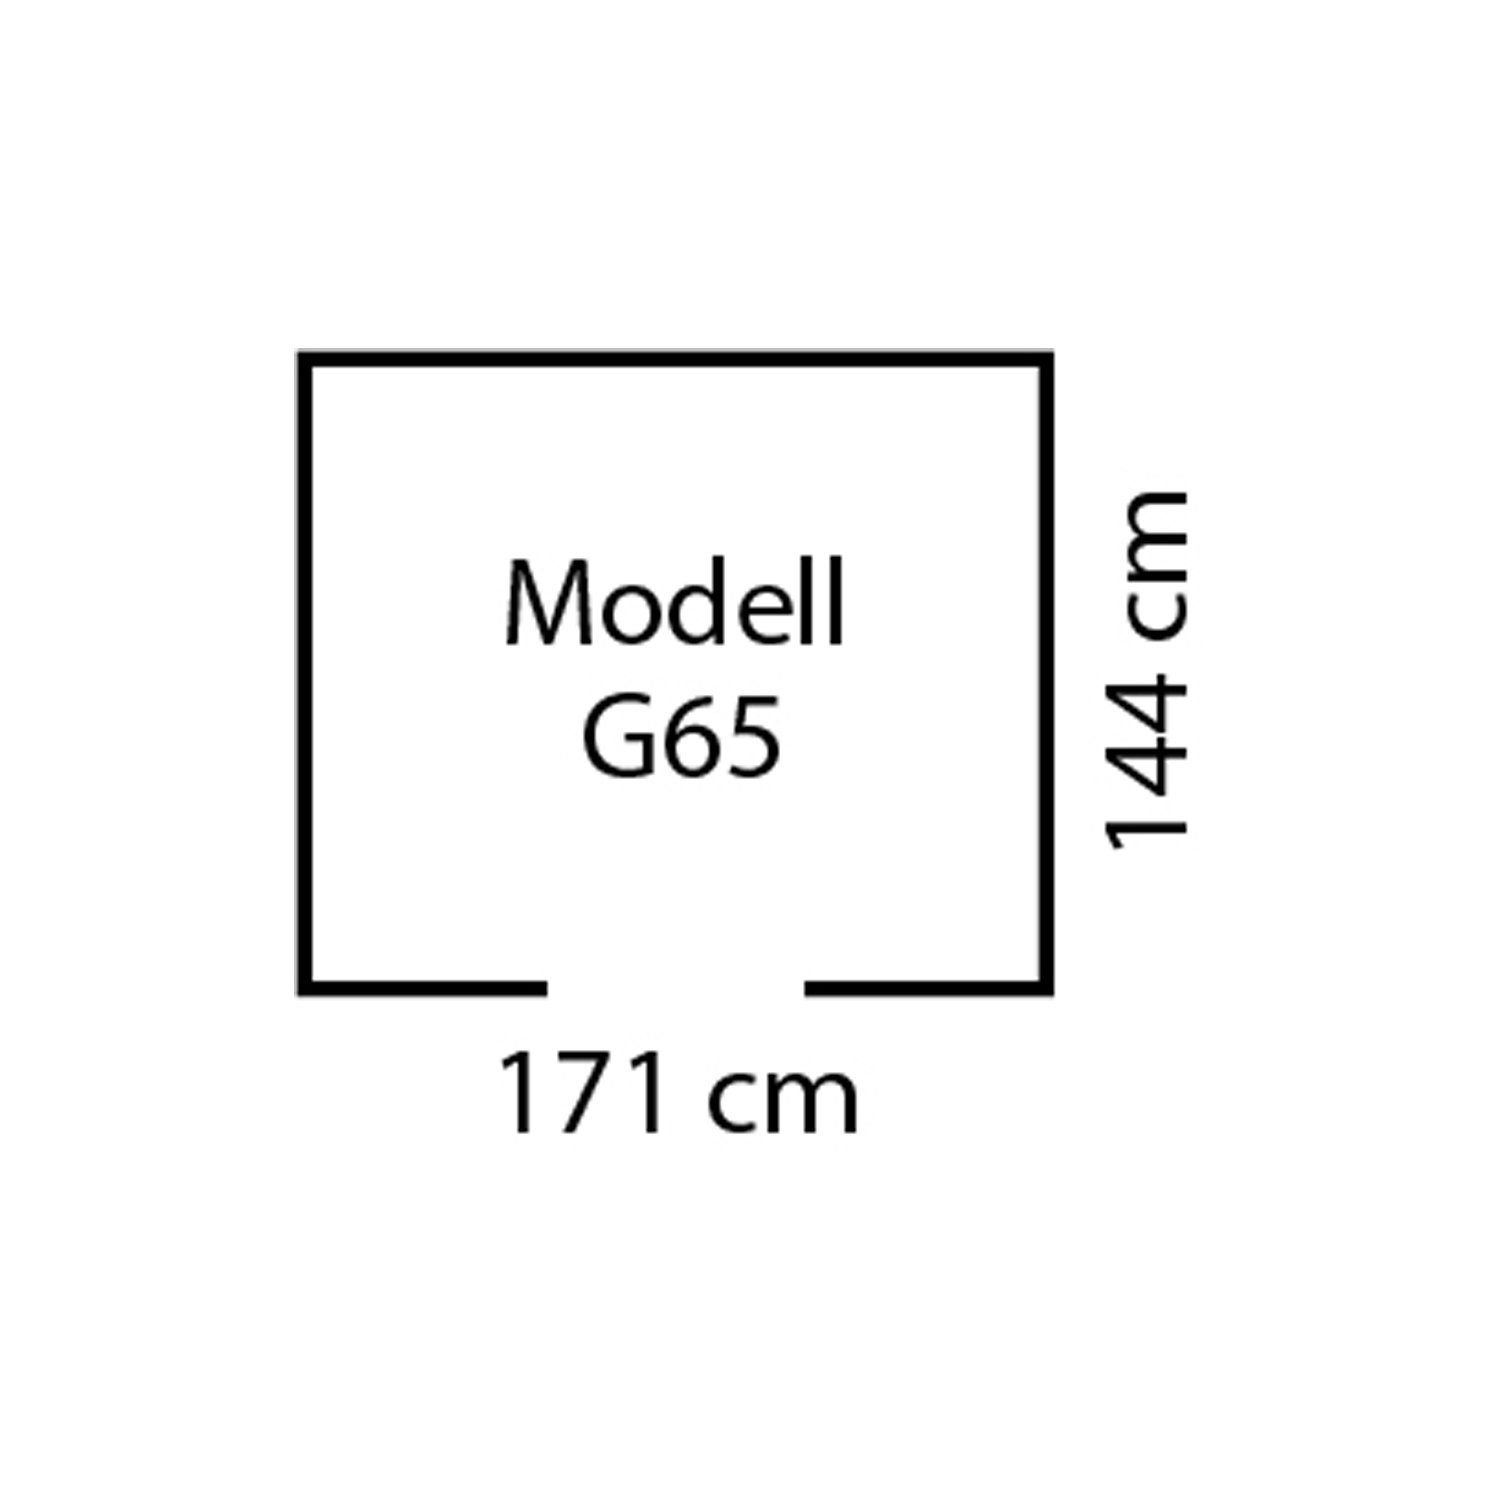 Globel Industries Gerätehaus Metall-Gartenmanager jade 65" (2,83 m) "Dream